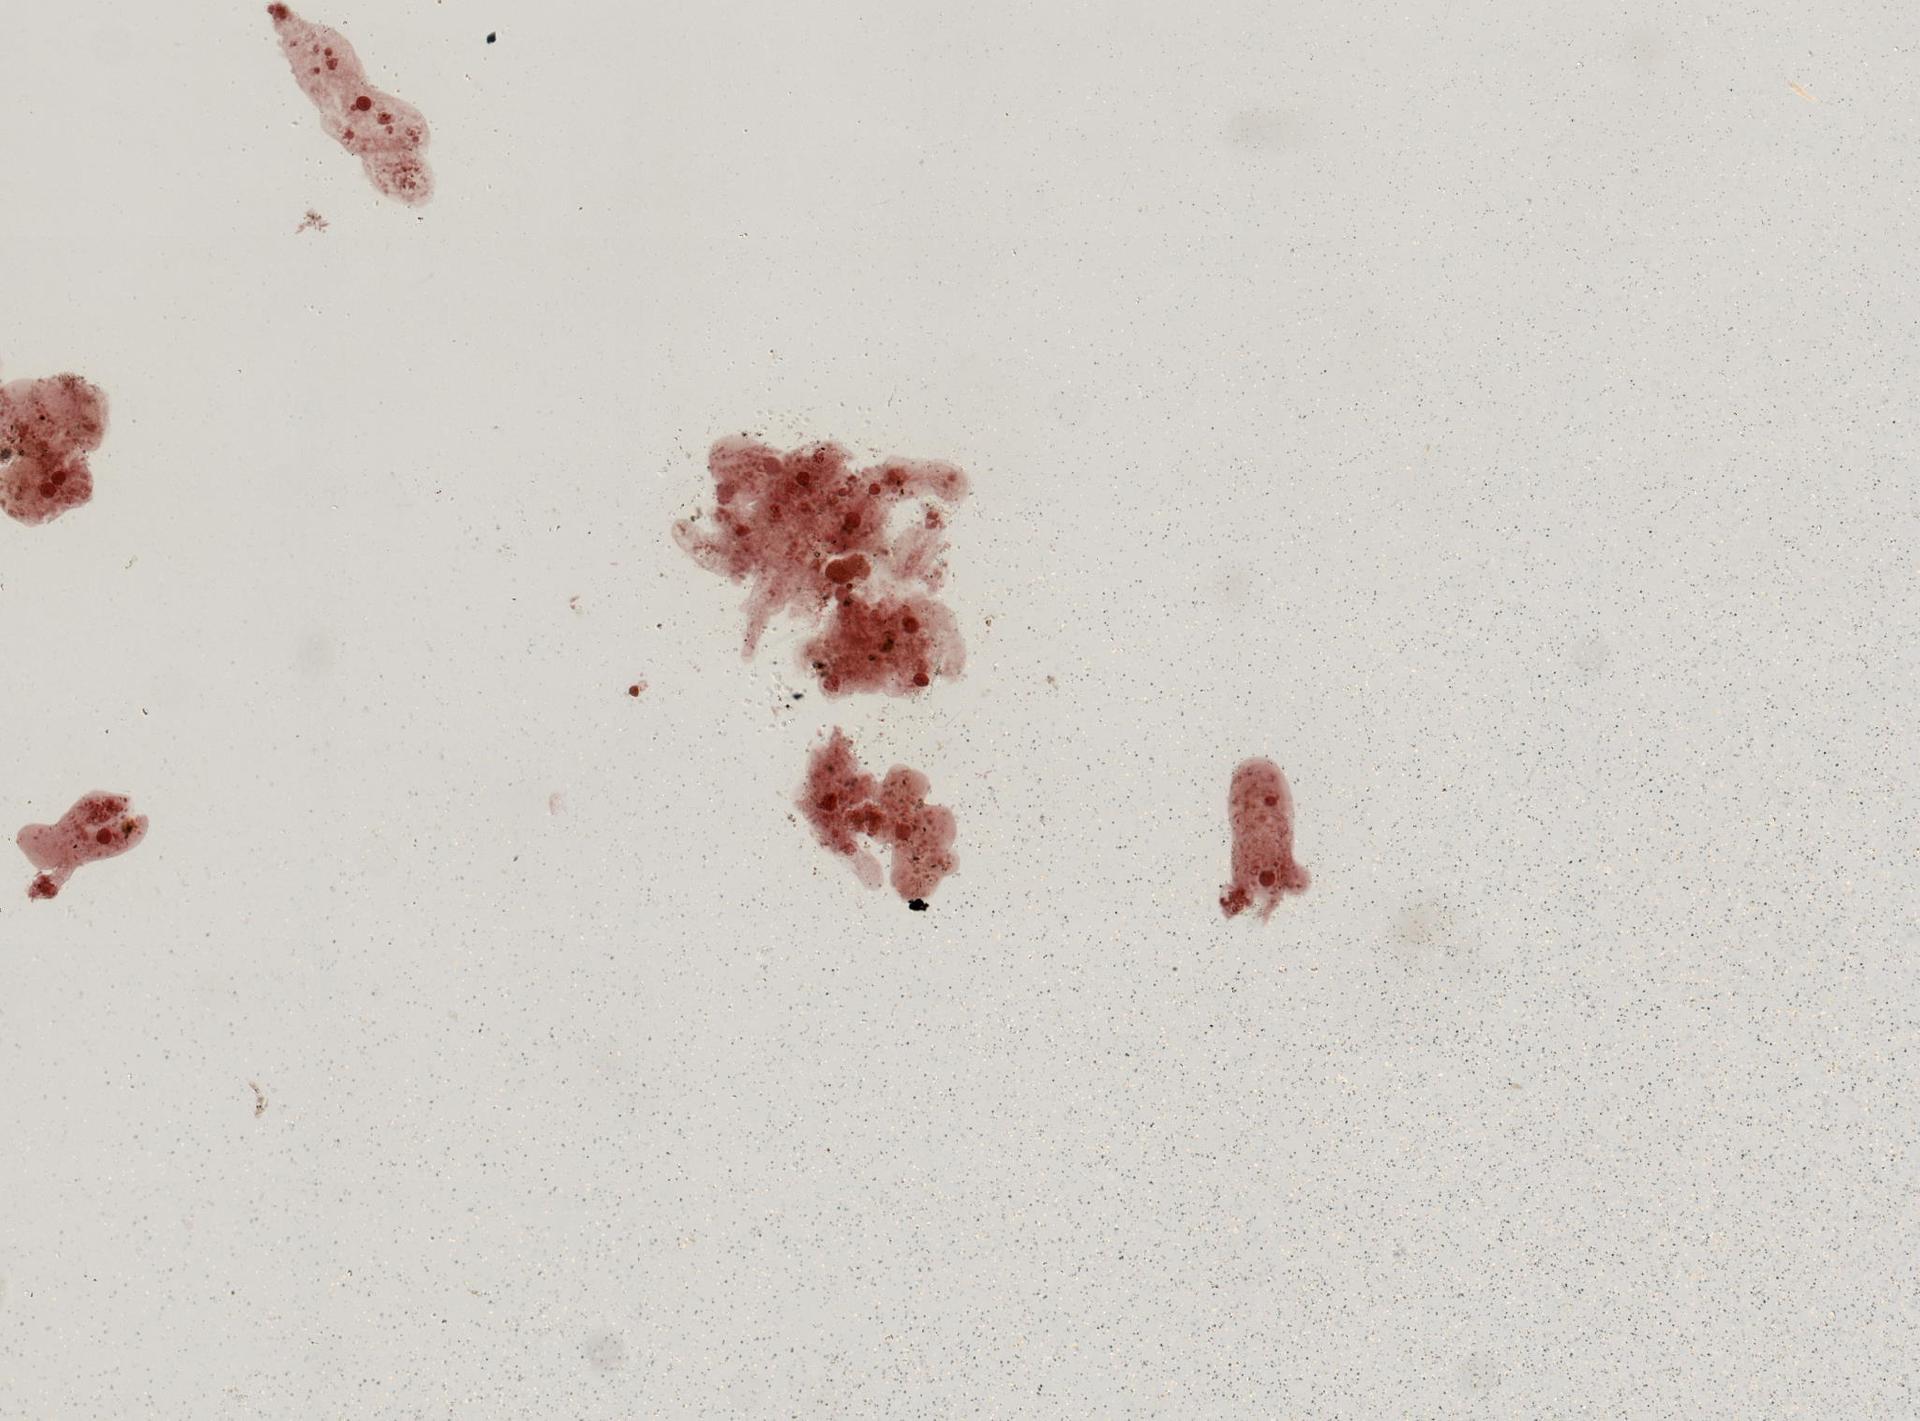 Amoeba proteus image